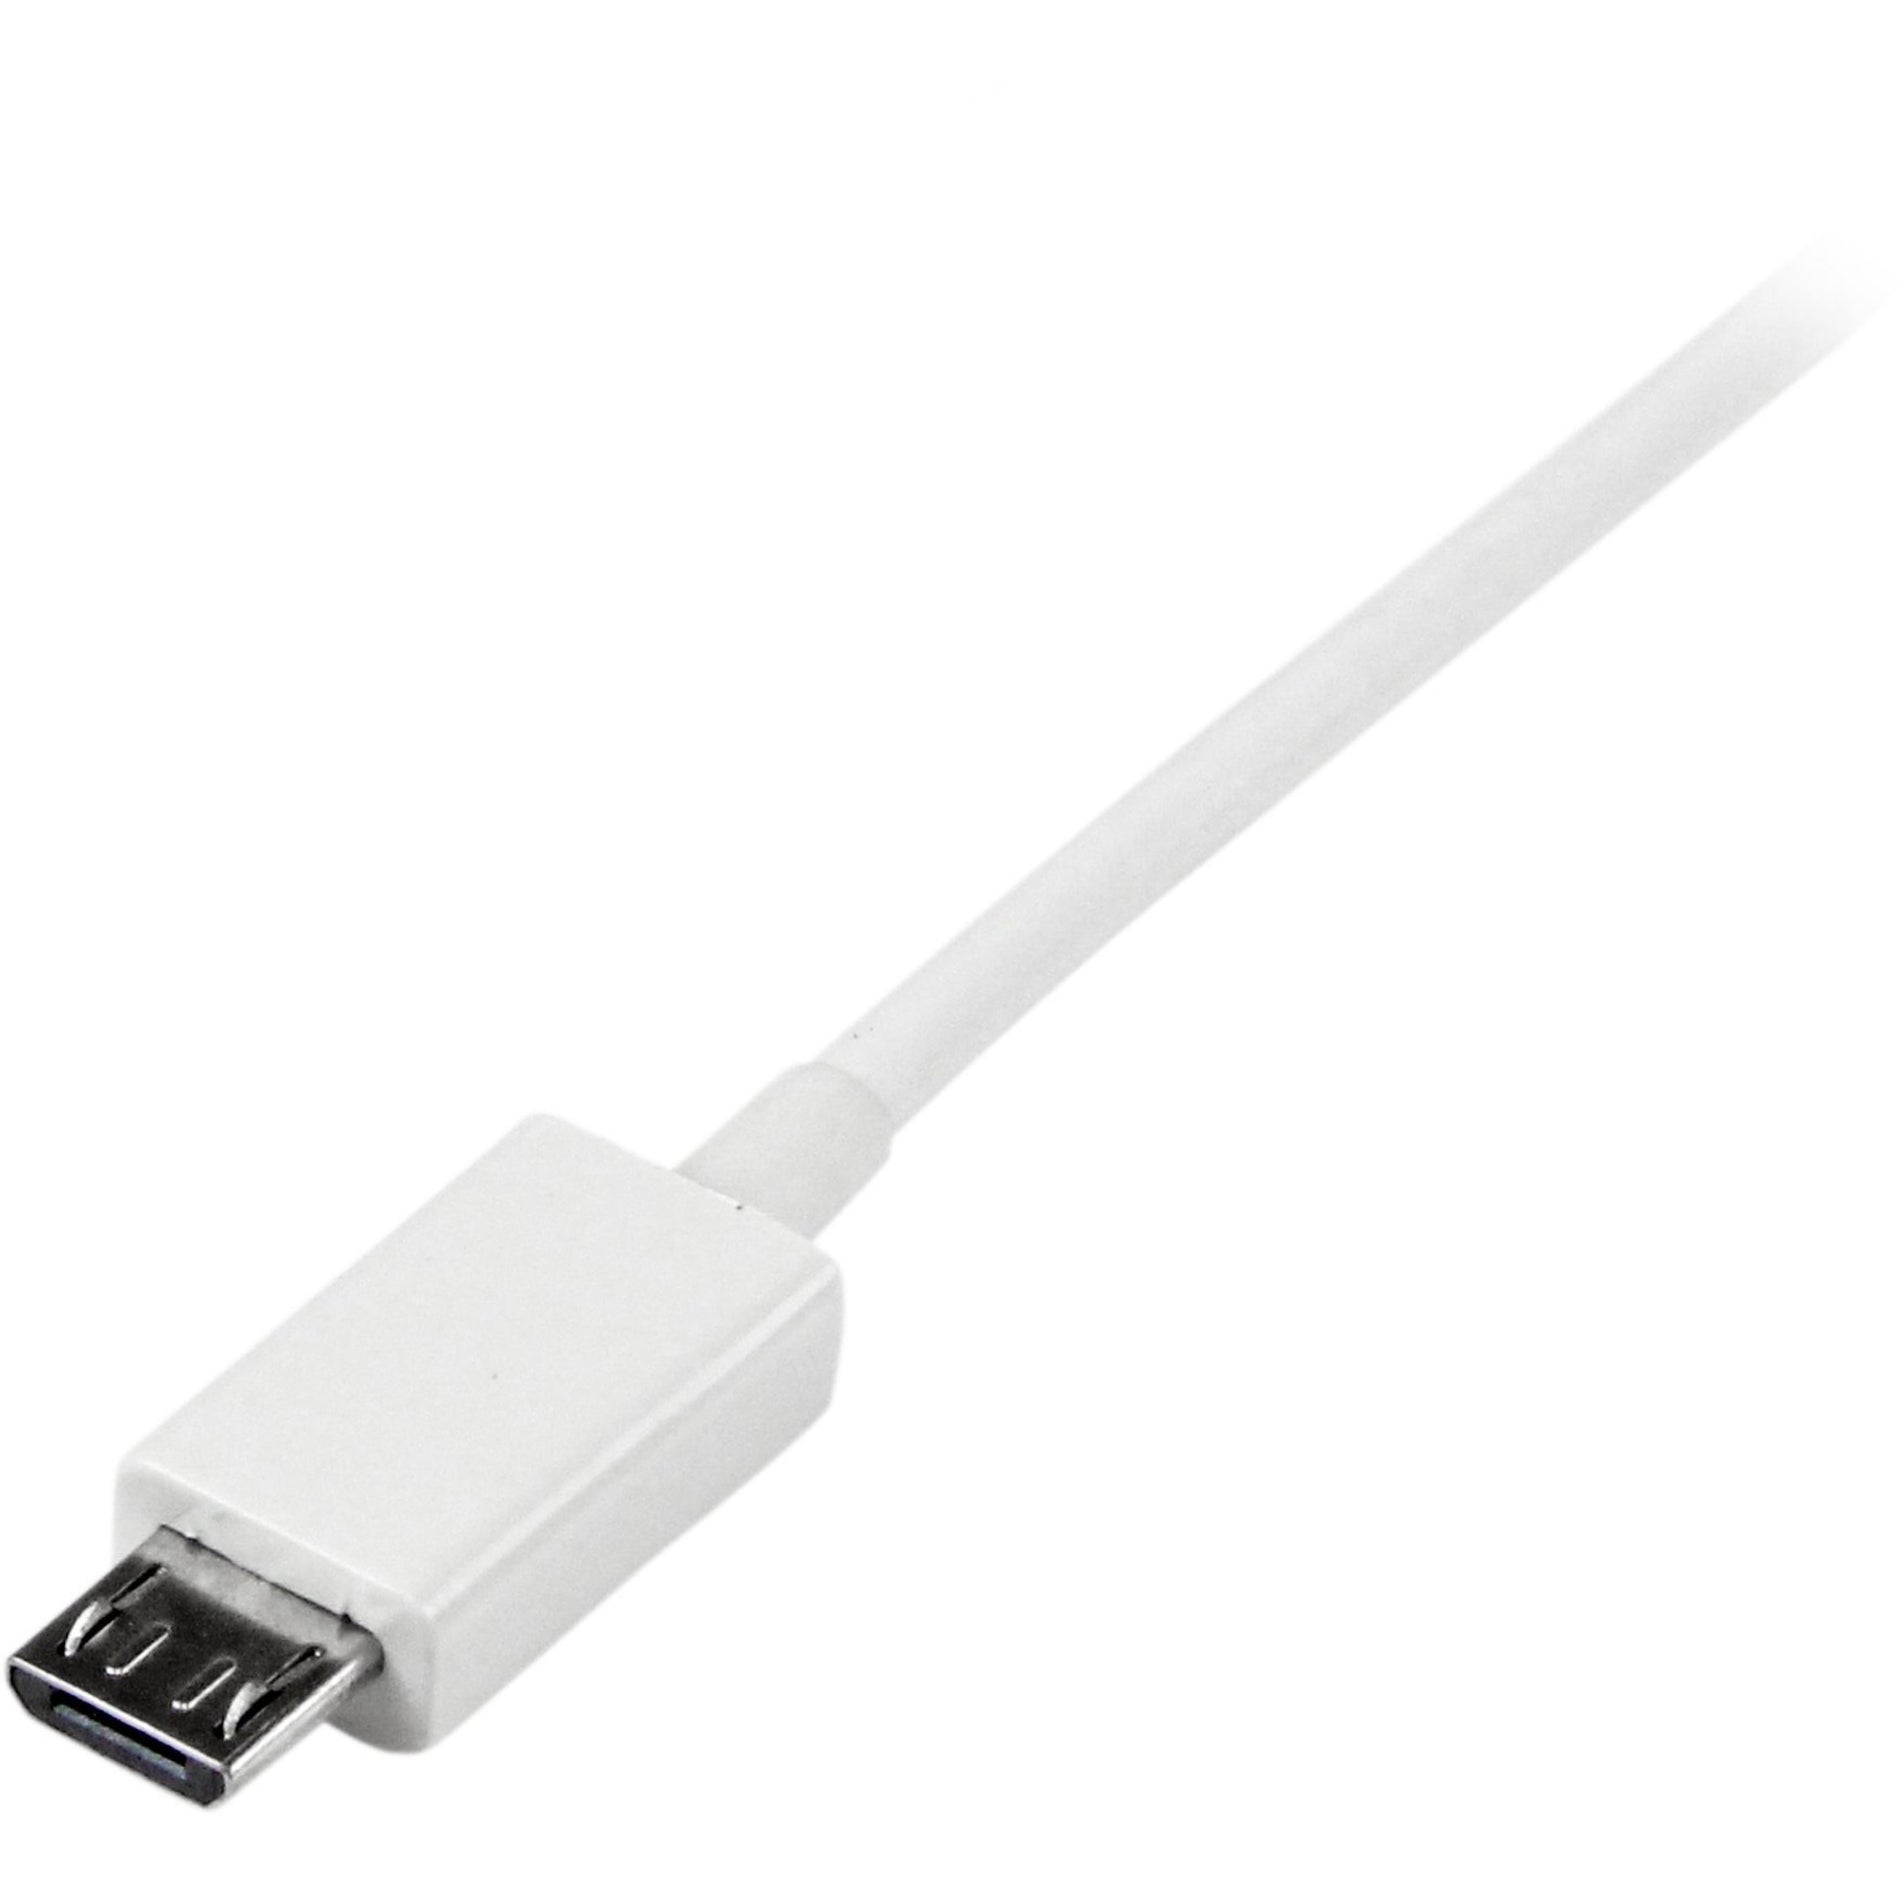 StarTech.com USBPAUB50CMW 0.5m 白色 微型 USB 电缆 - A 到 Micro B，成型，应变，480 M 比特/秒 数据传输速率  品牌名称: 星美科技